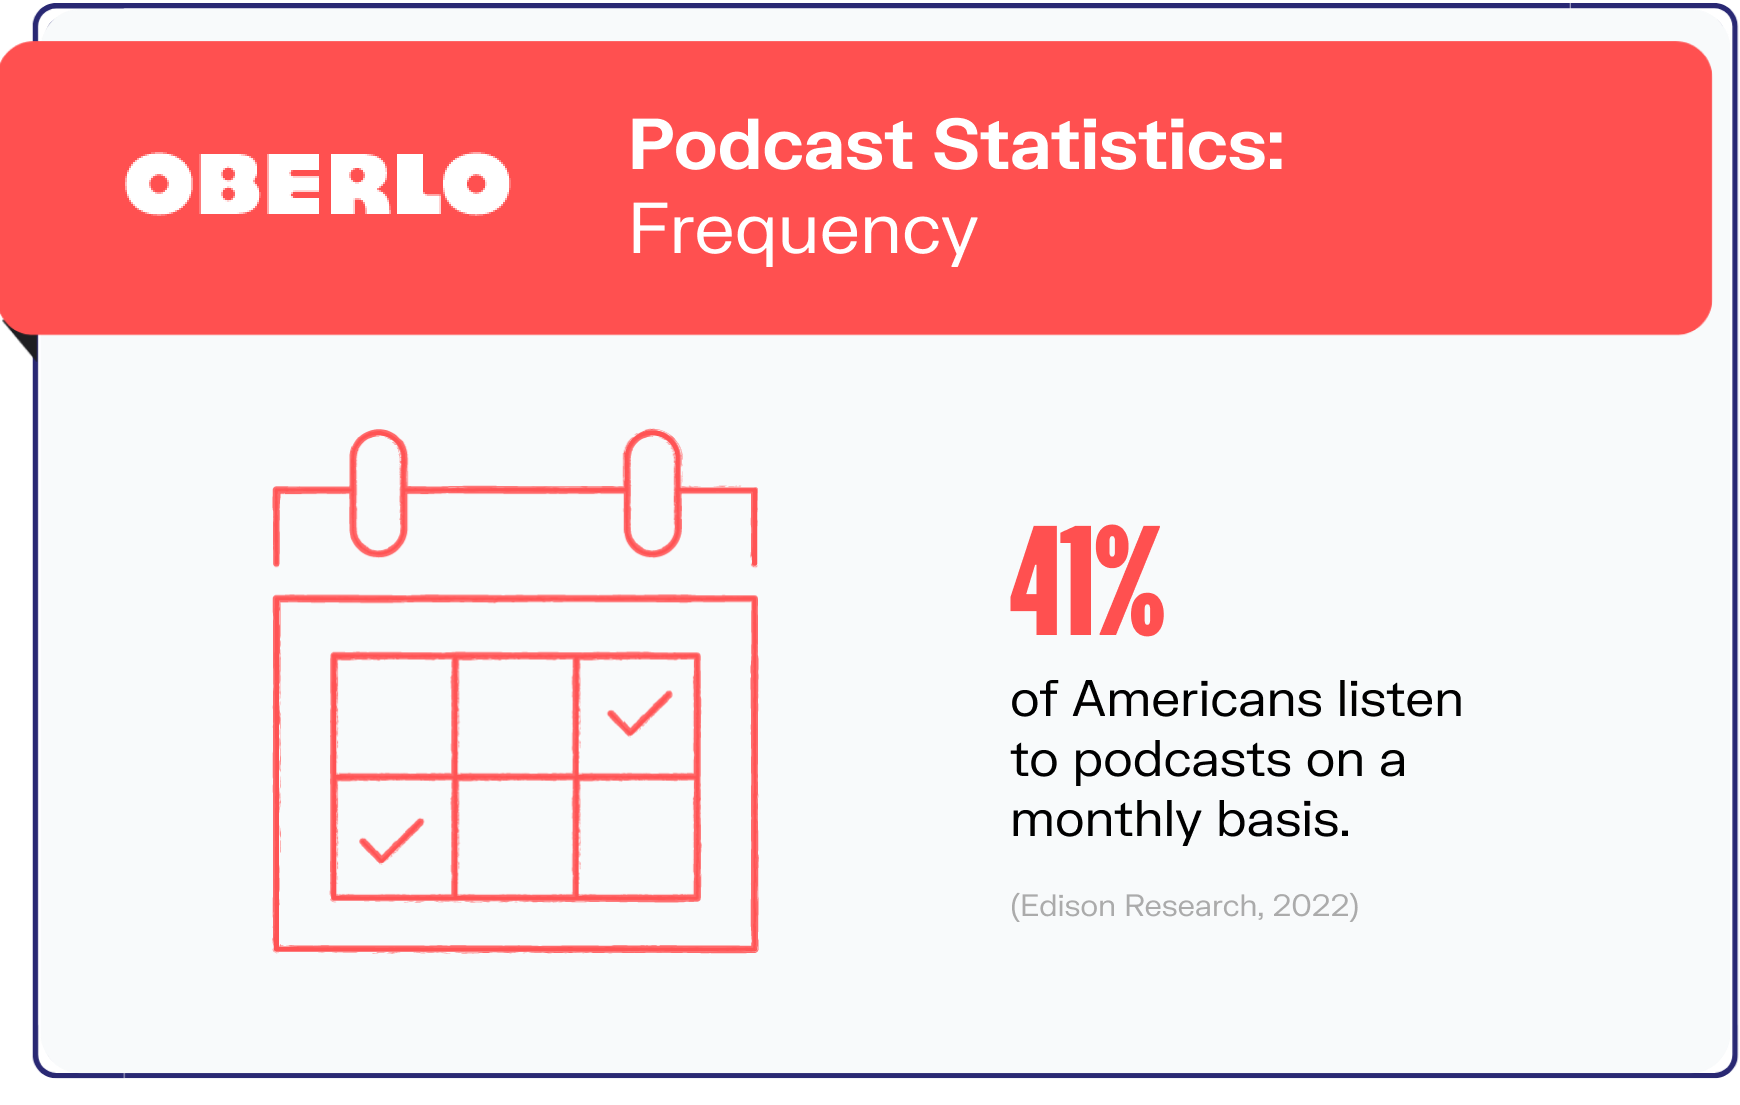 podcast statistics graphic5